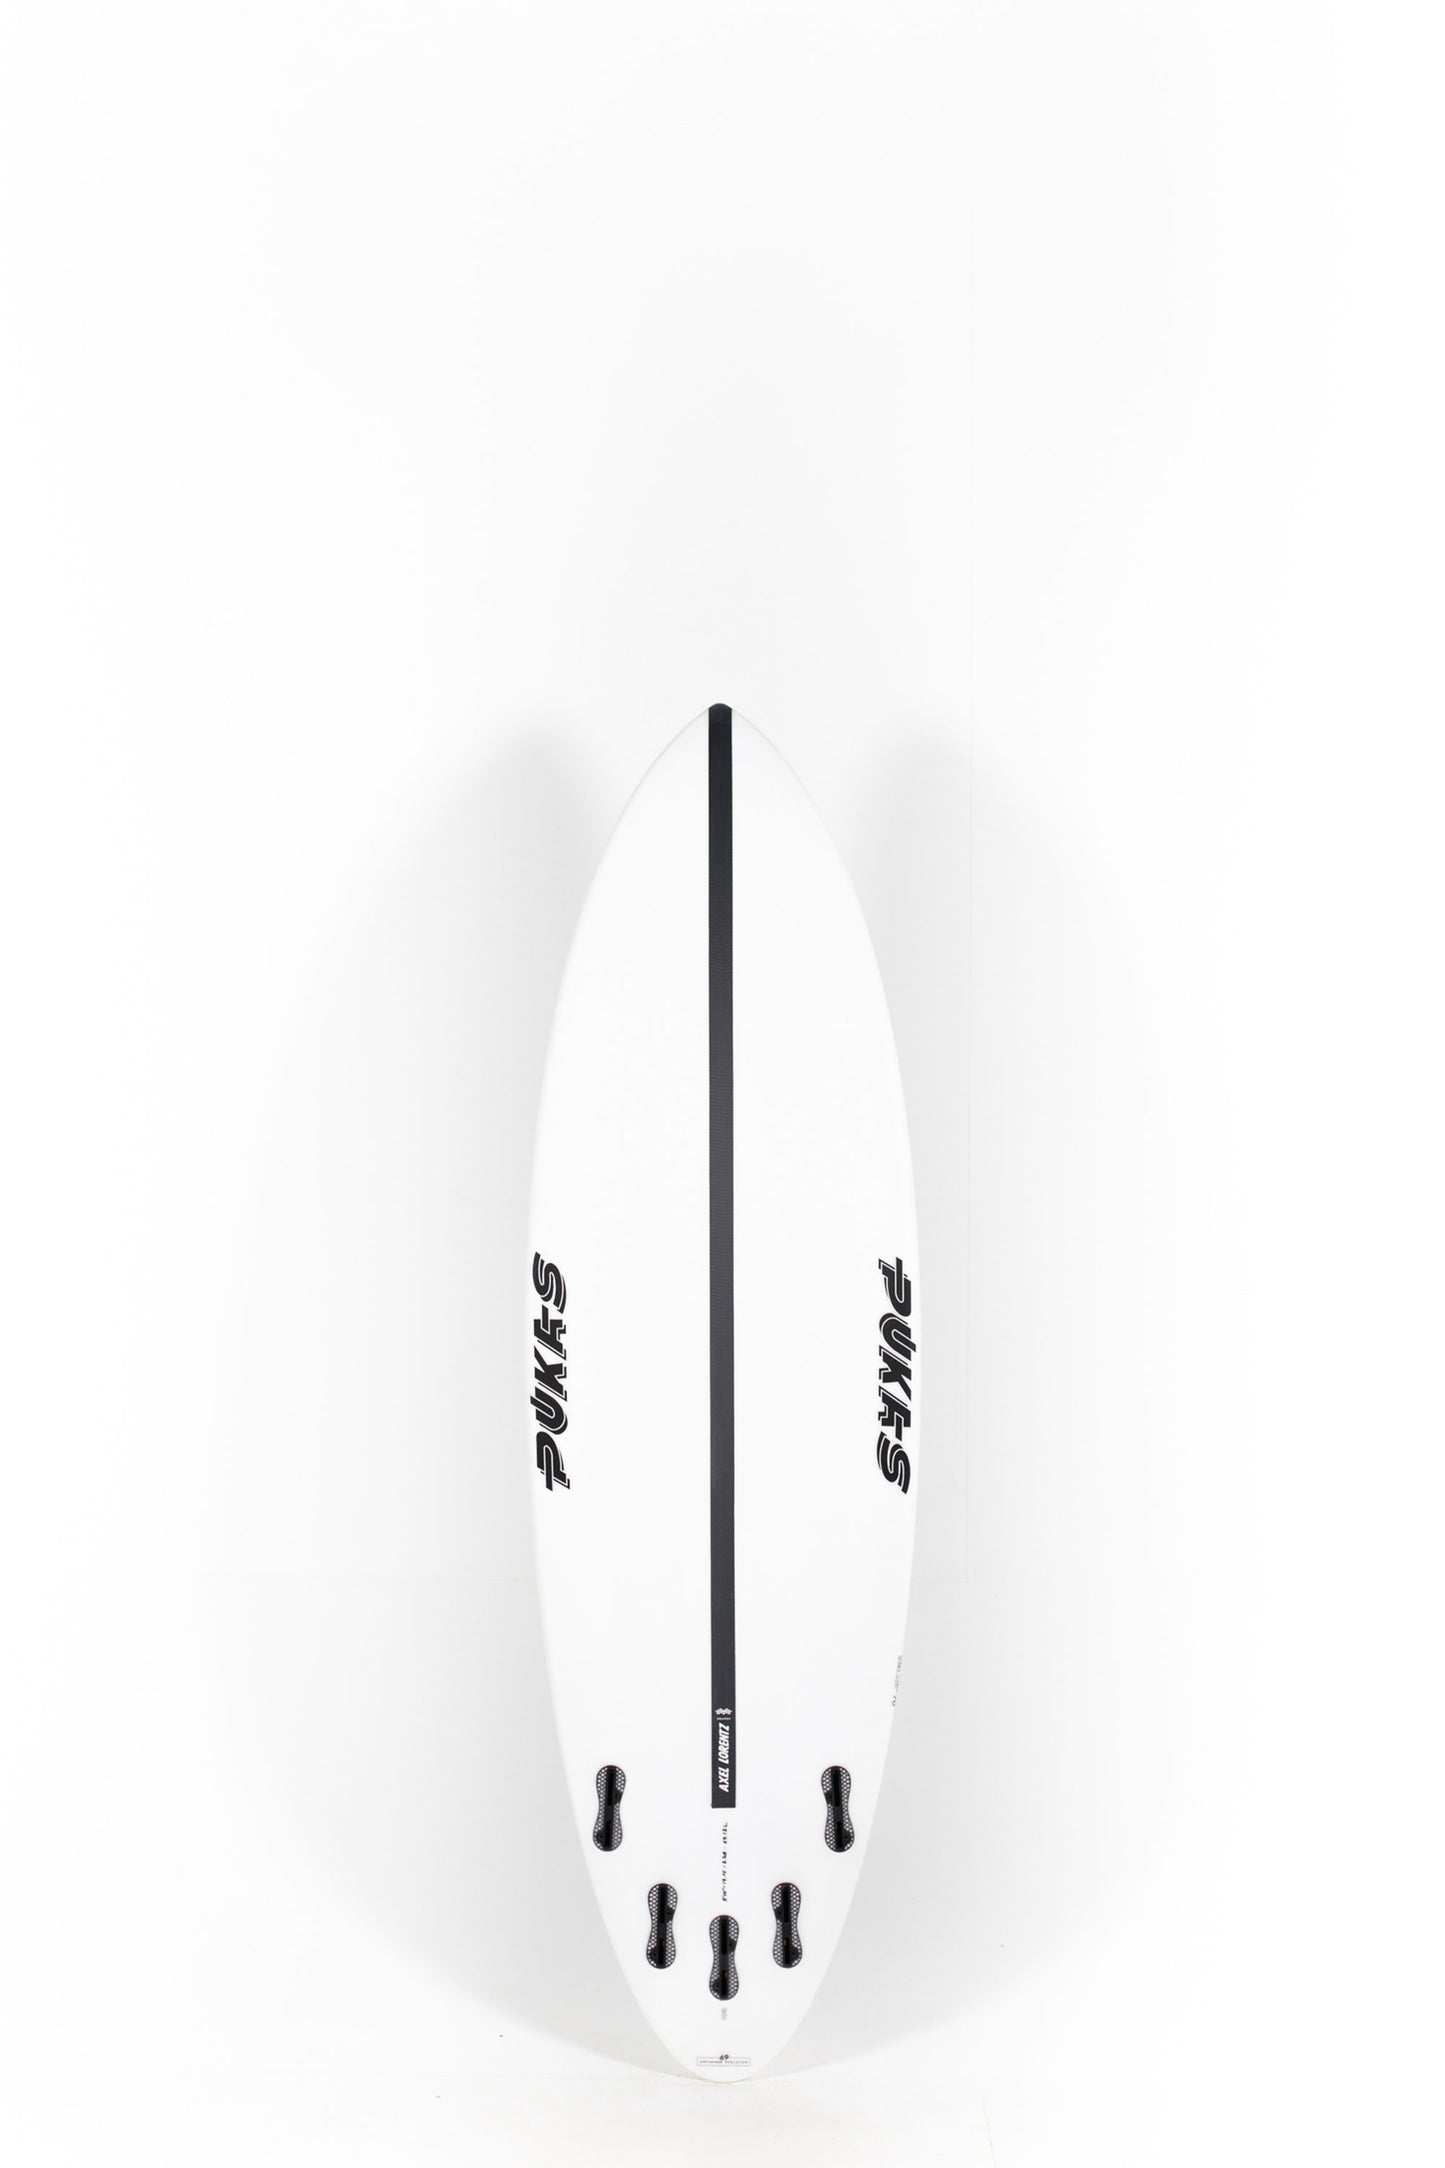 Pukas Surf Shop - Pukas Surfboard - INNCA Tech - 69ER EVOLUTION by Axel Lorentz- 5’10” x 19,75 x 2,38 - 29,10L